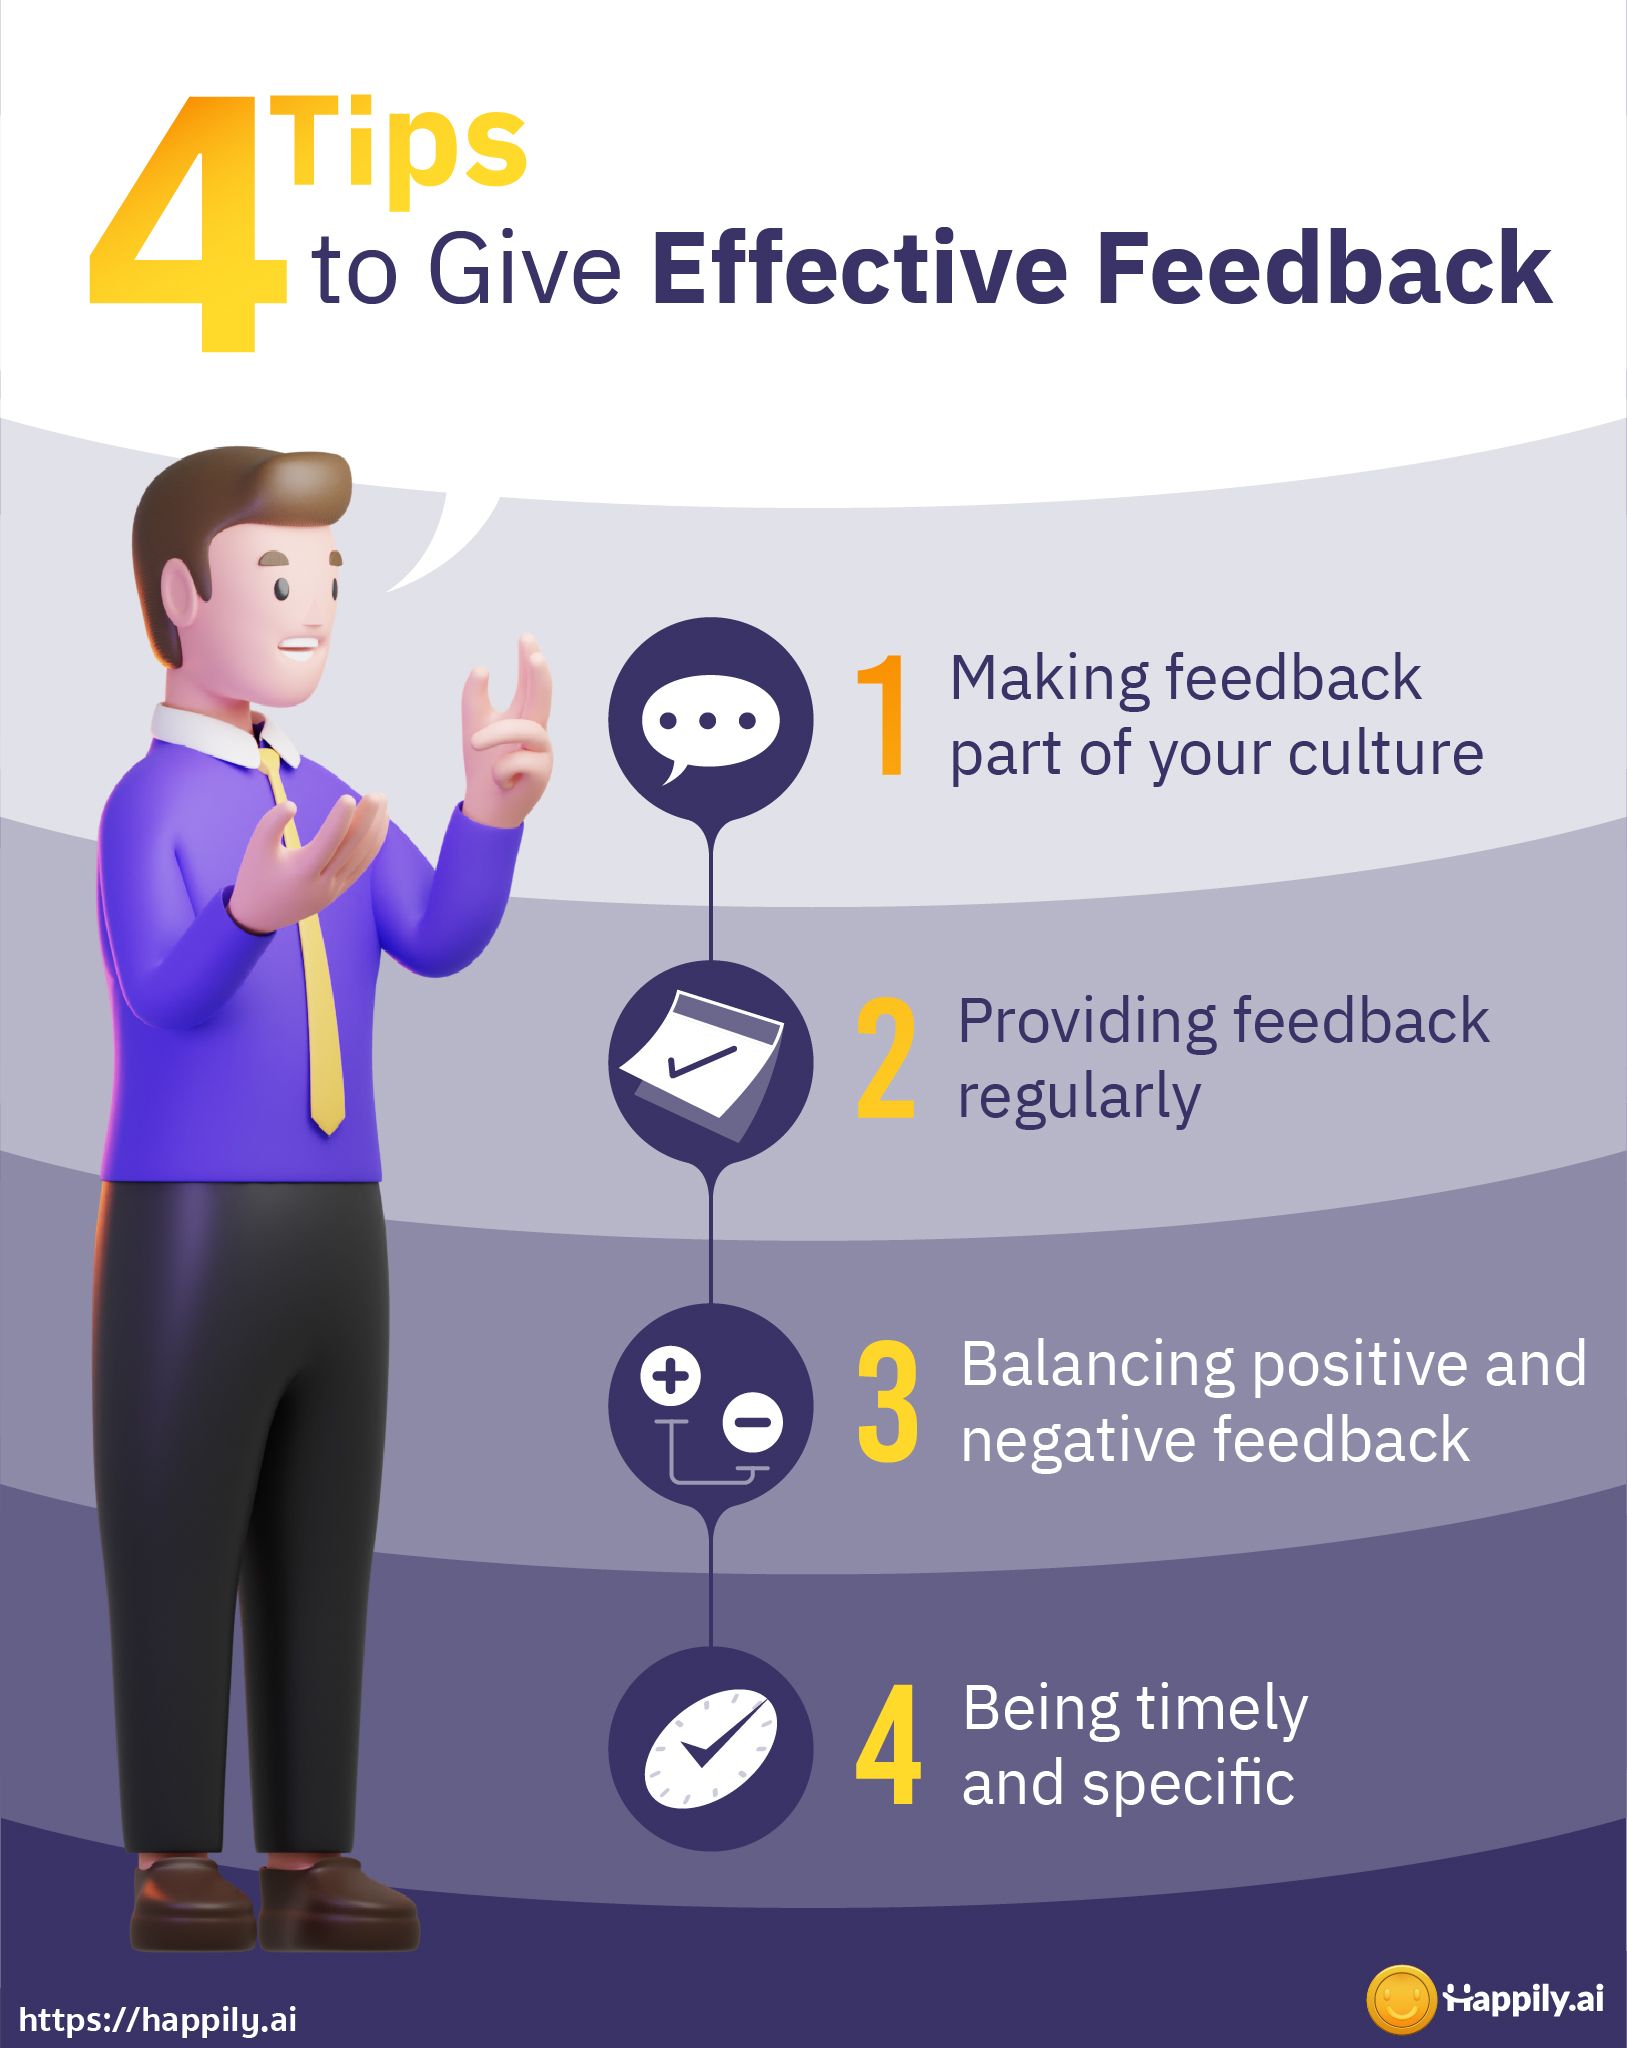 Tips to give effective feedback